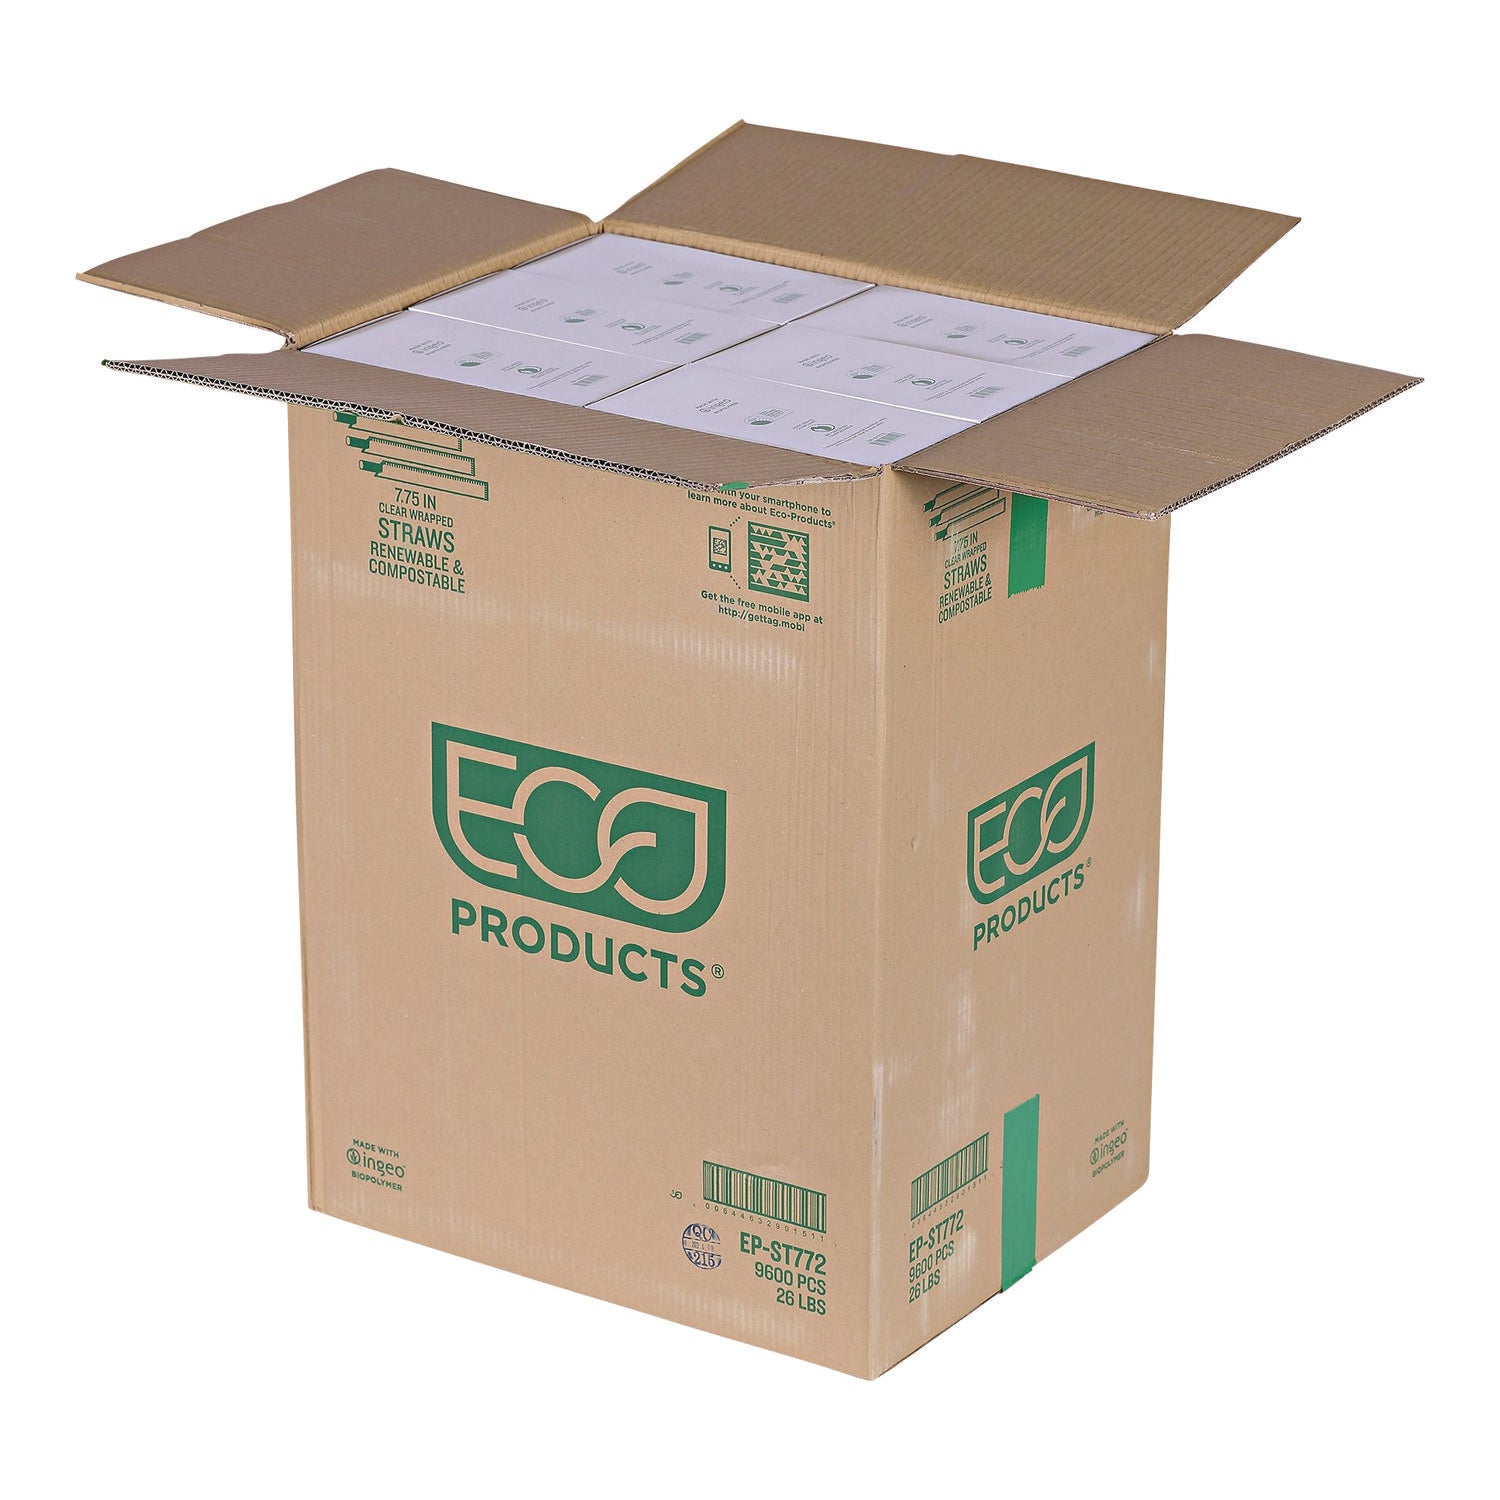 wrapped-straw-775-green-plastic-9600-carton_ecoepst772 - 3